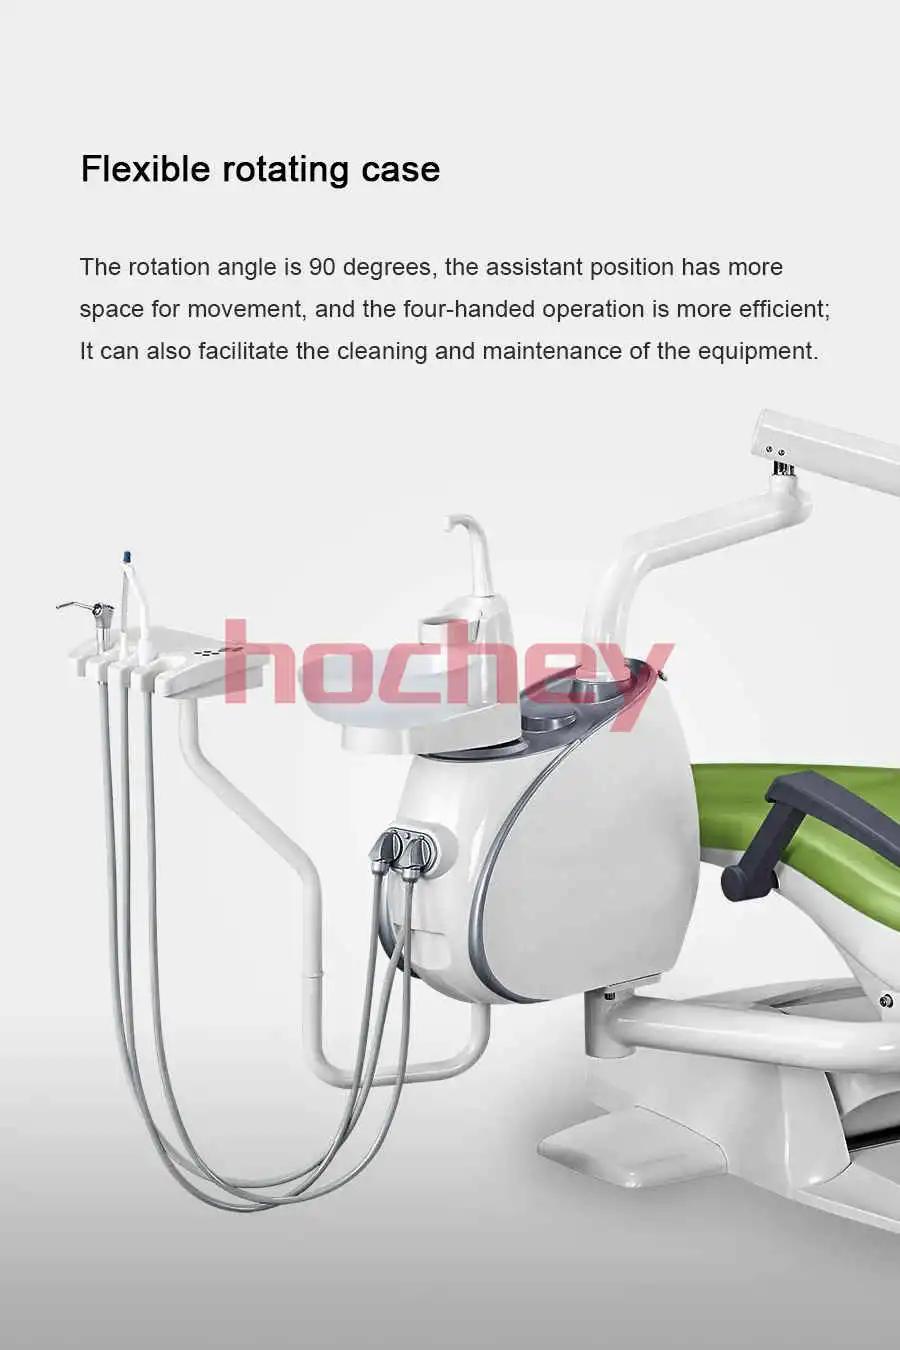 Hochey Medical Equipment Comprehensive Treatment Dental Chair Dental Machine